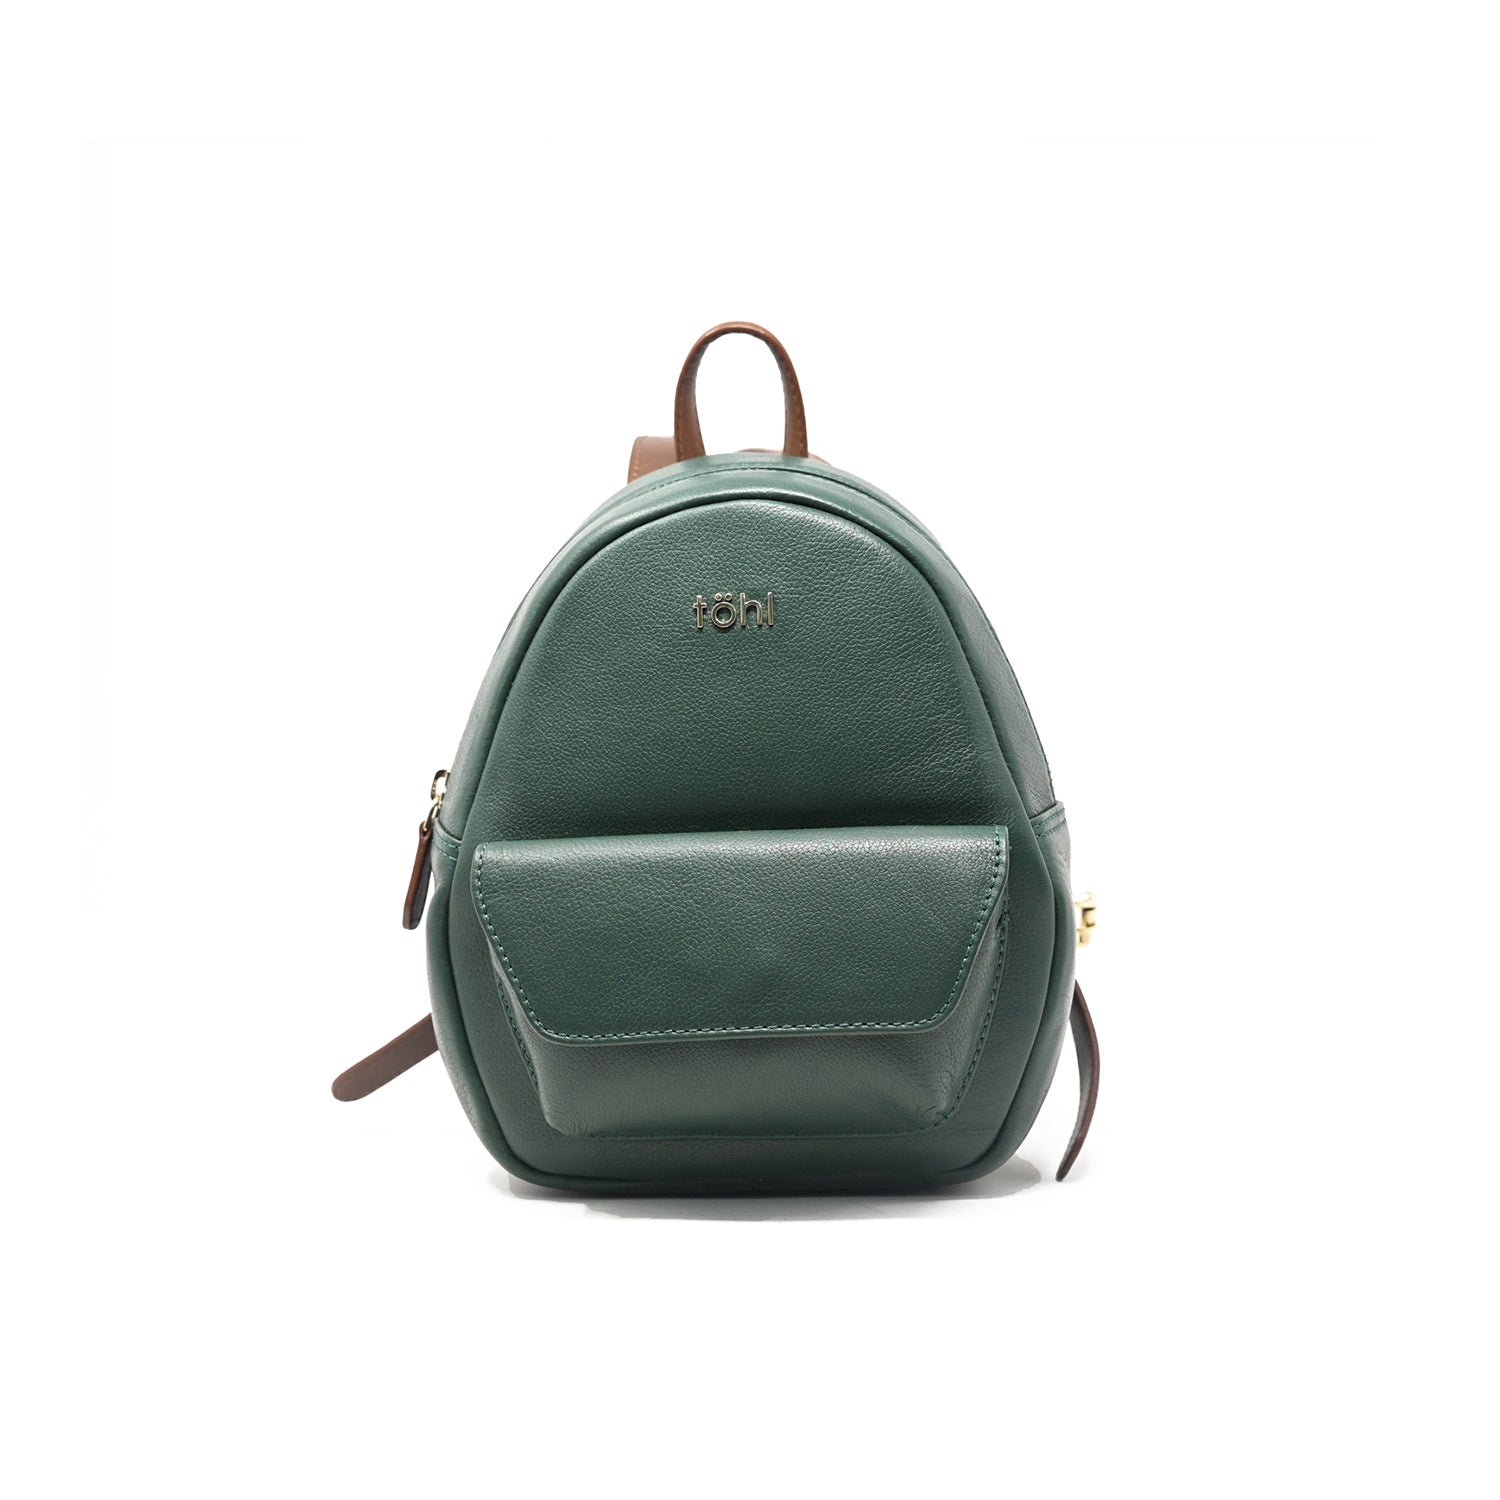 Stuart Backpack in Dark Green Leather | Darby Scott